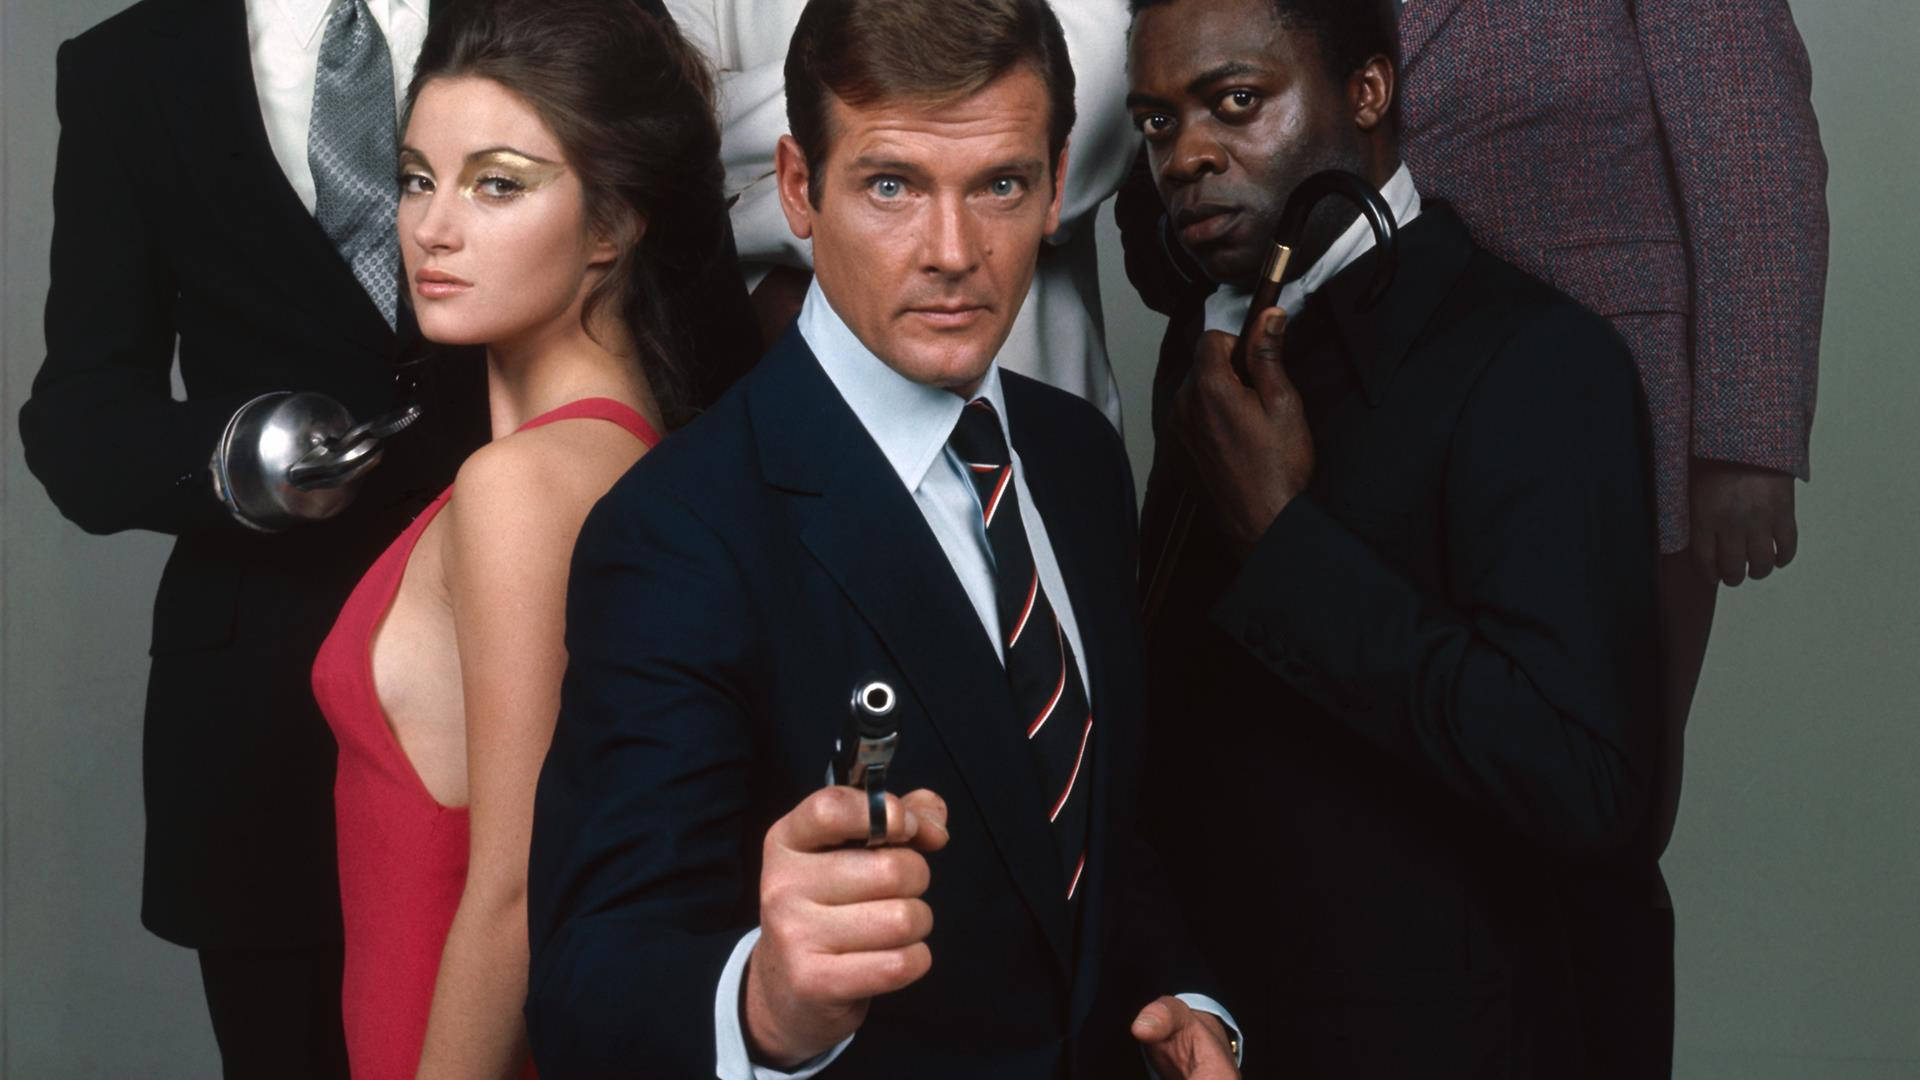 James Bond Movie Poster With Yaphet Kotto Wallpaper